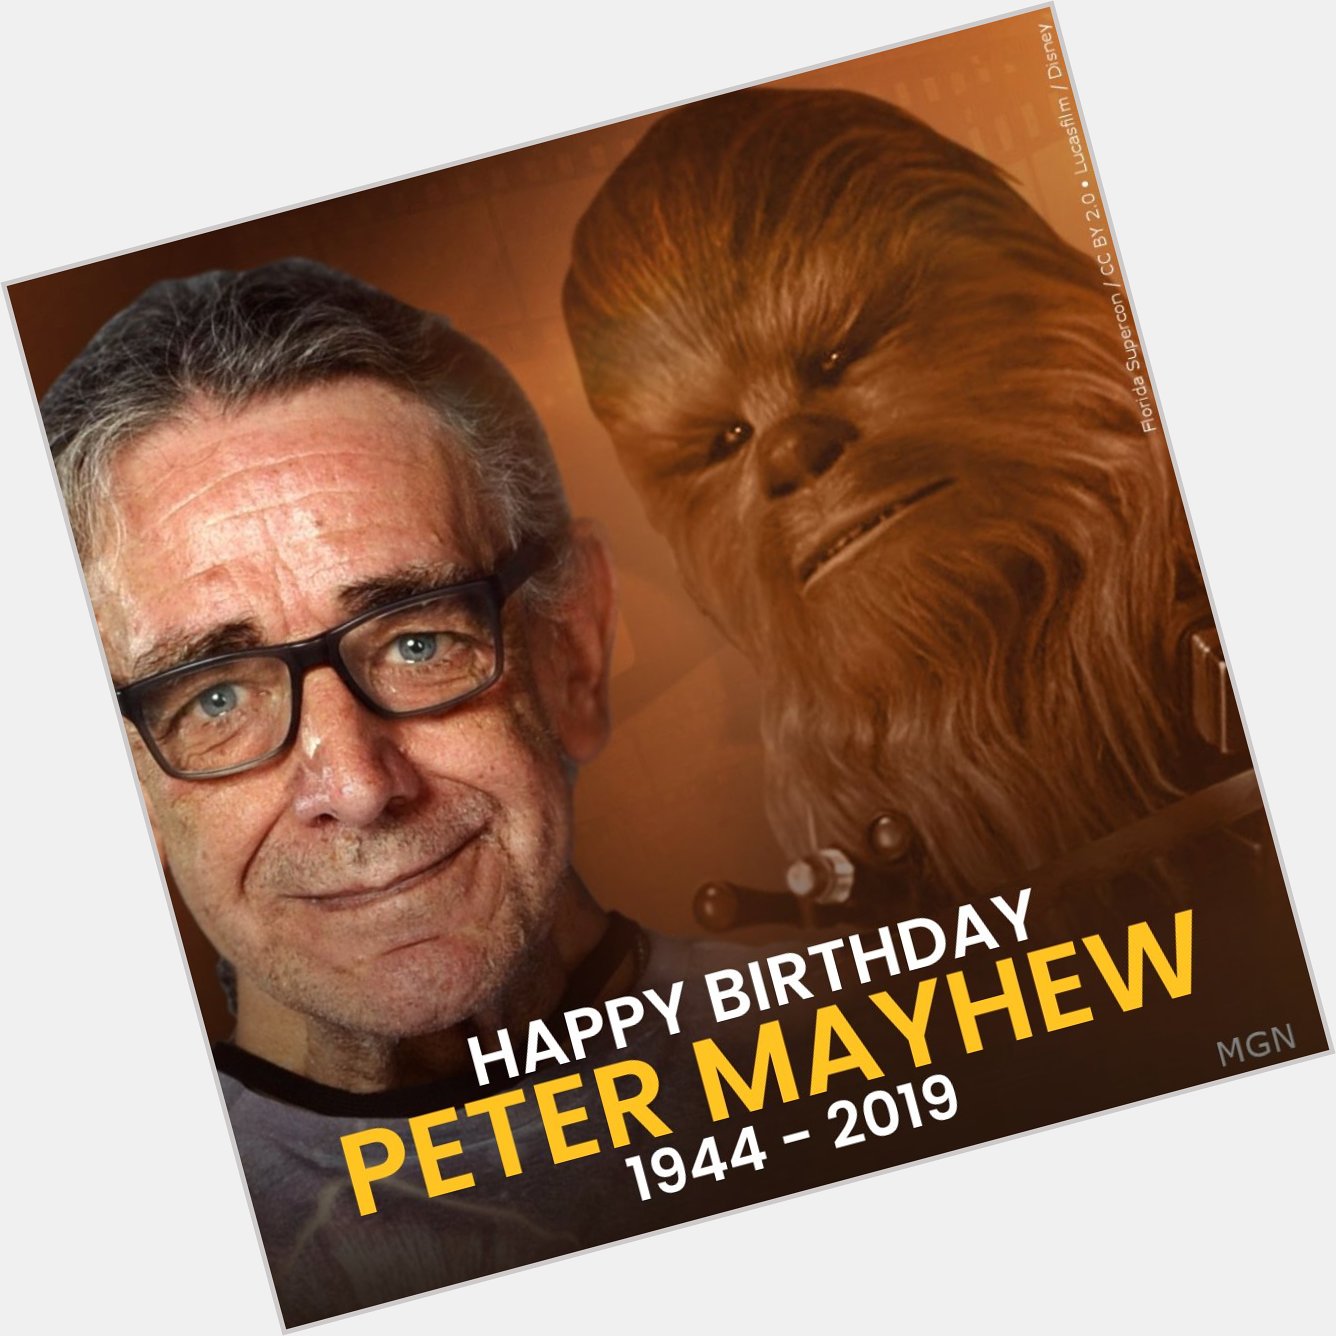 Happy Birthday, Peter Mayhew 